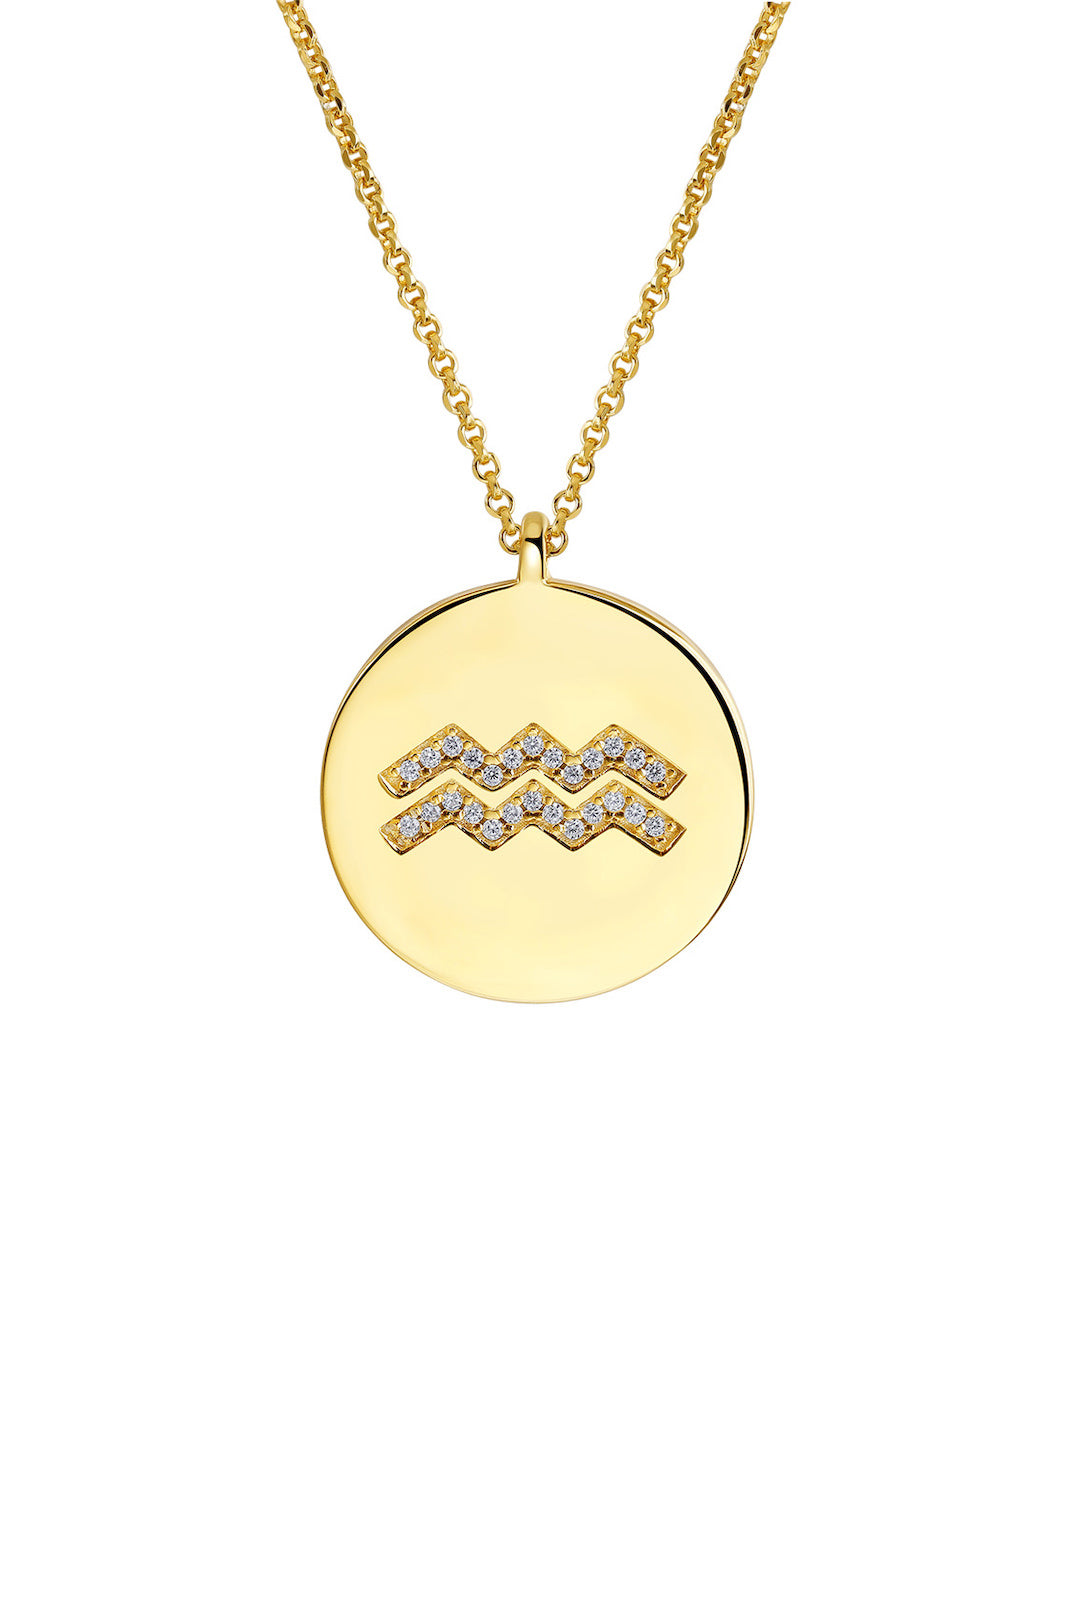 Silver Aquarius Zodiac Pendant Necklace| Hersey & Son Silversmiths